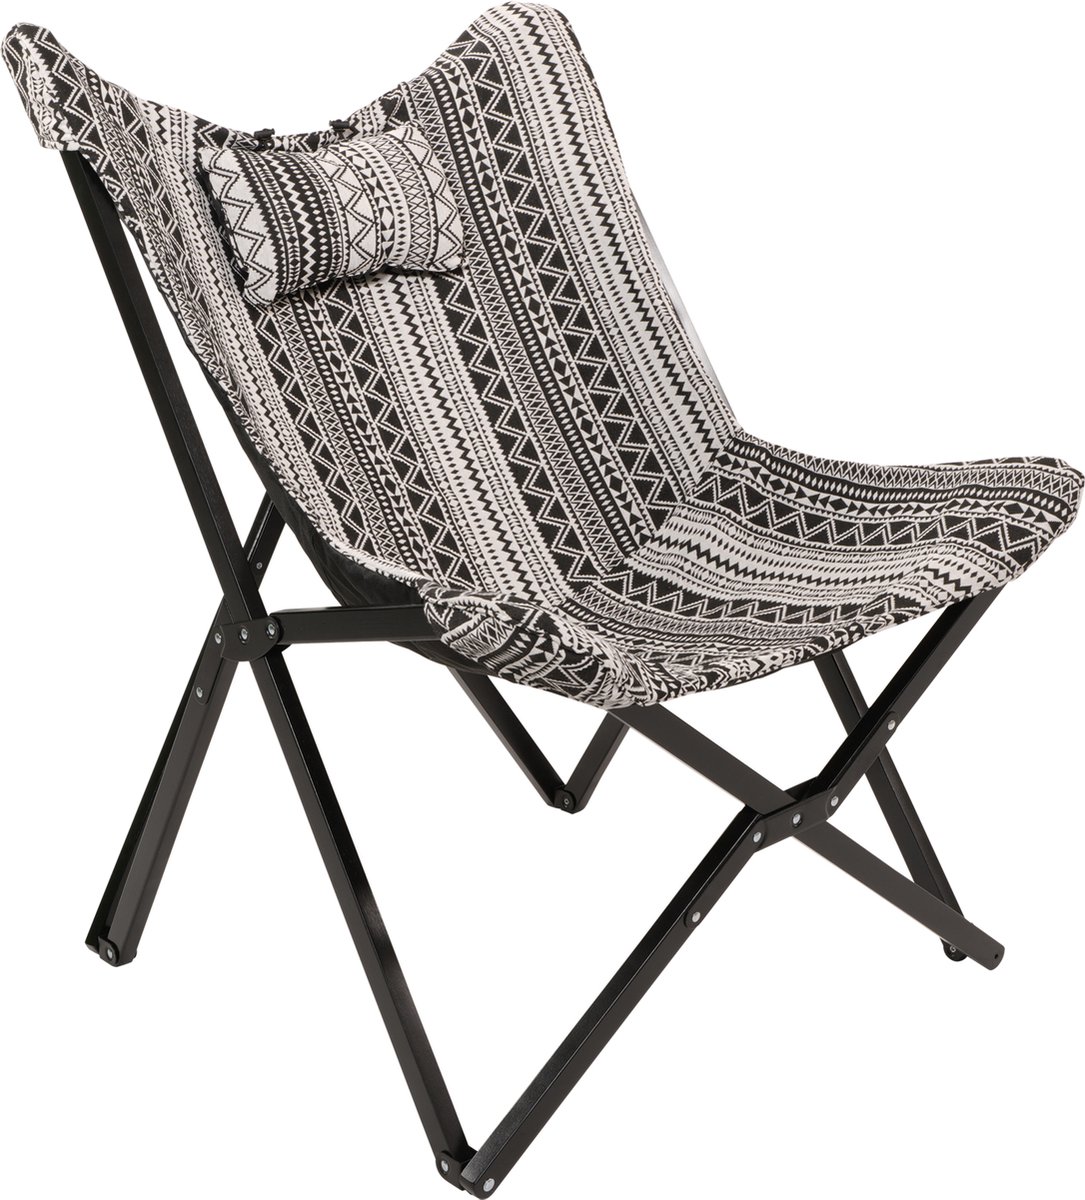 Butterfly - Vlinder fauteuil - katoen polyester - azteken deco - houten beuk frame - zwart - plooibaar